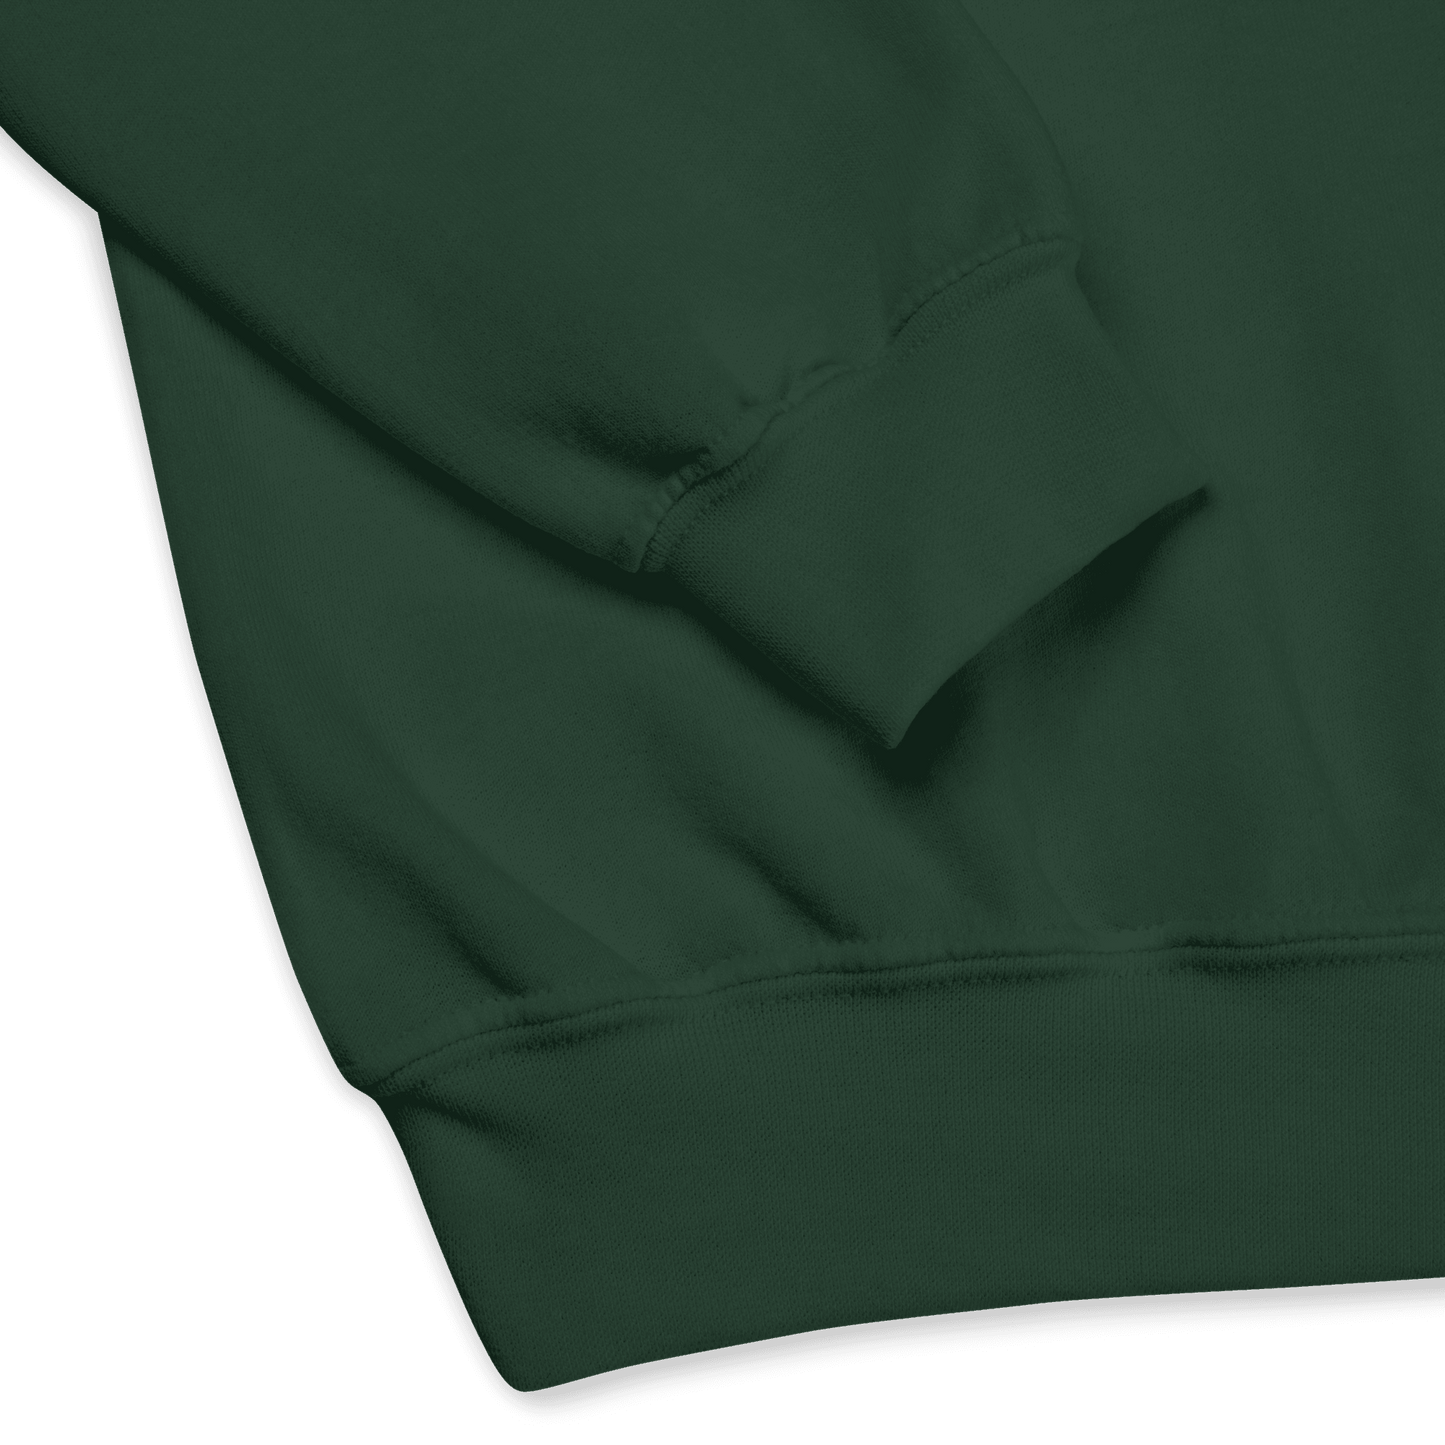 Official Merchandise embroidered sweatshirt